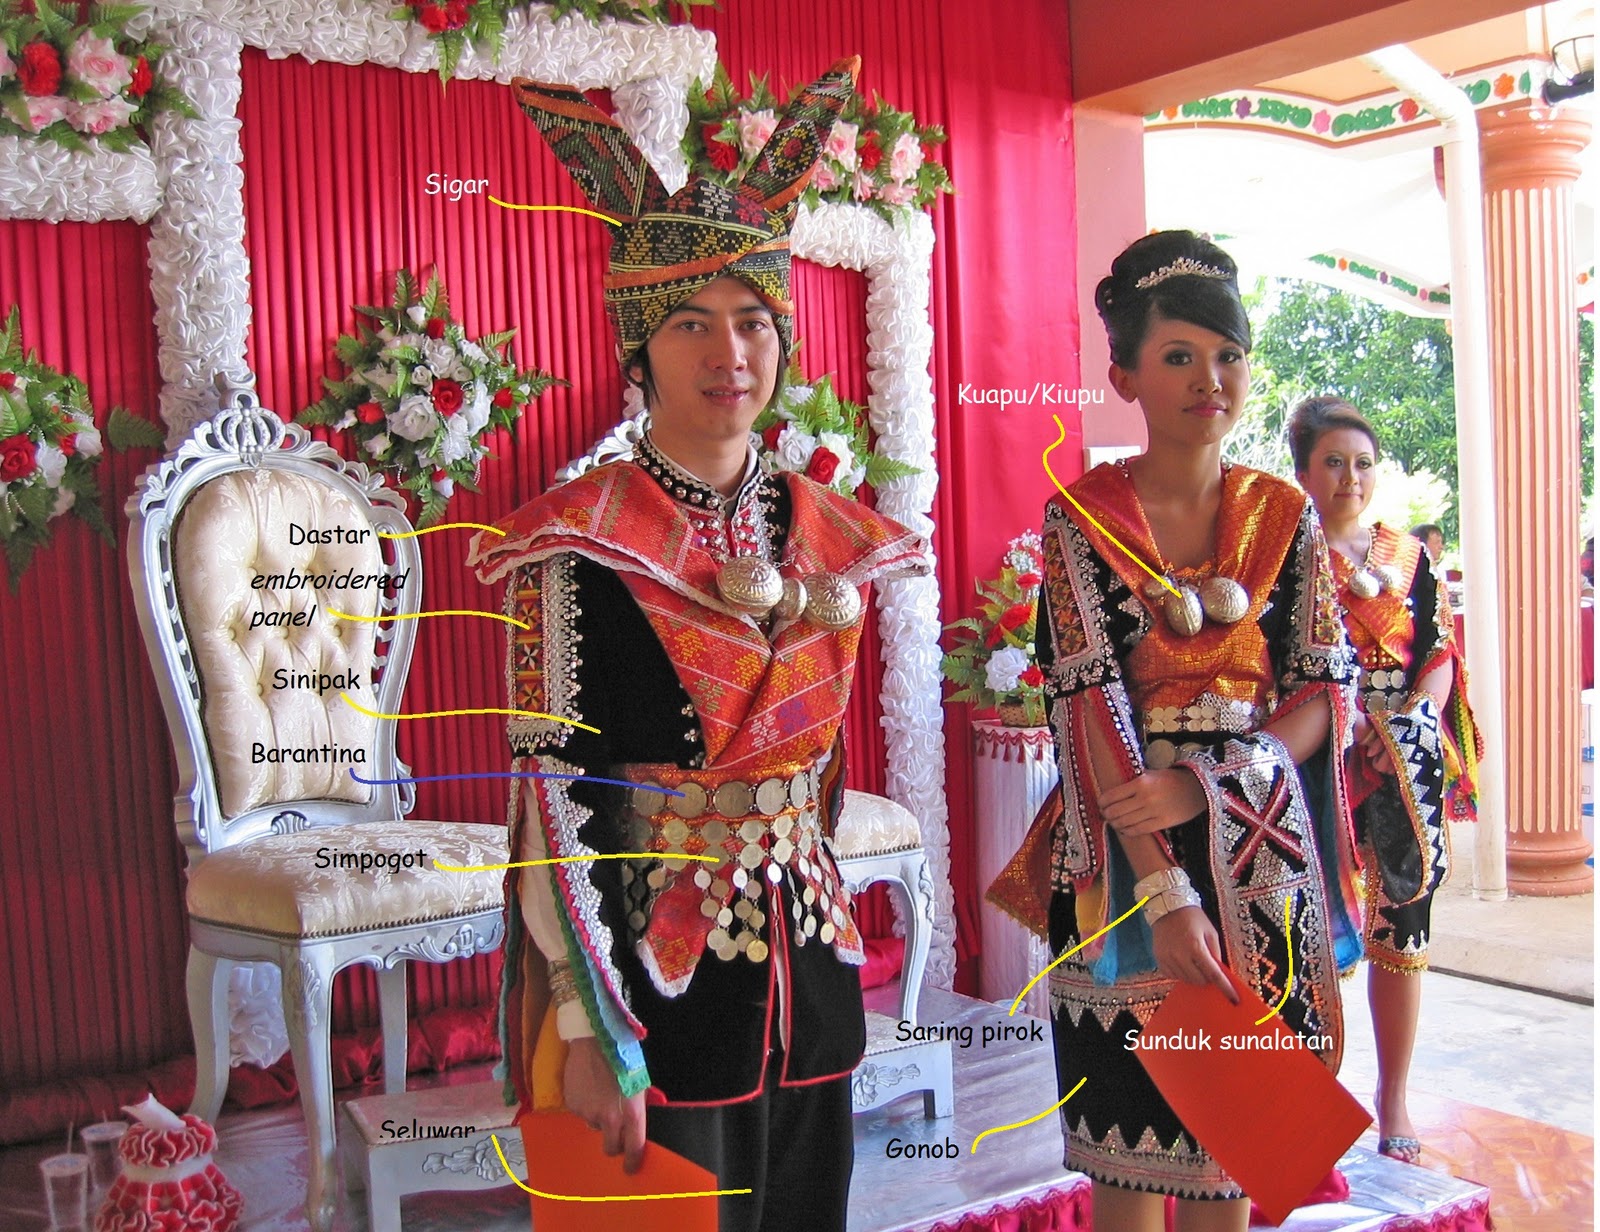 Tea With Tina: Who says Dusun weddings are black and white?